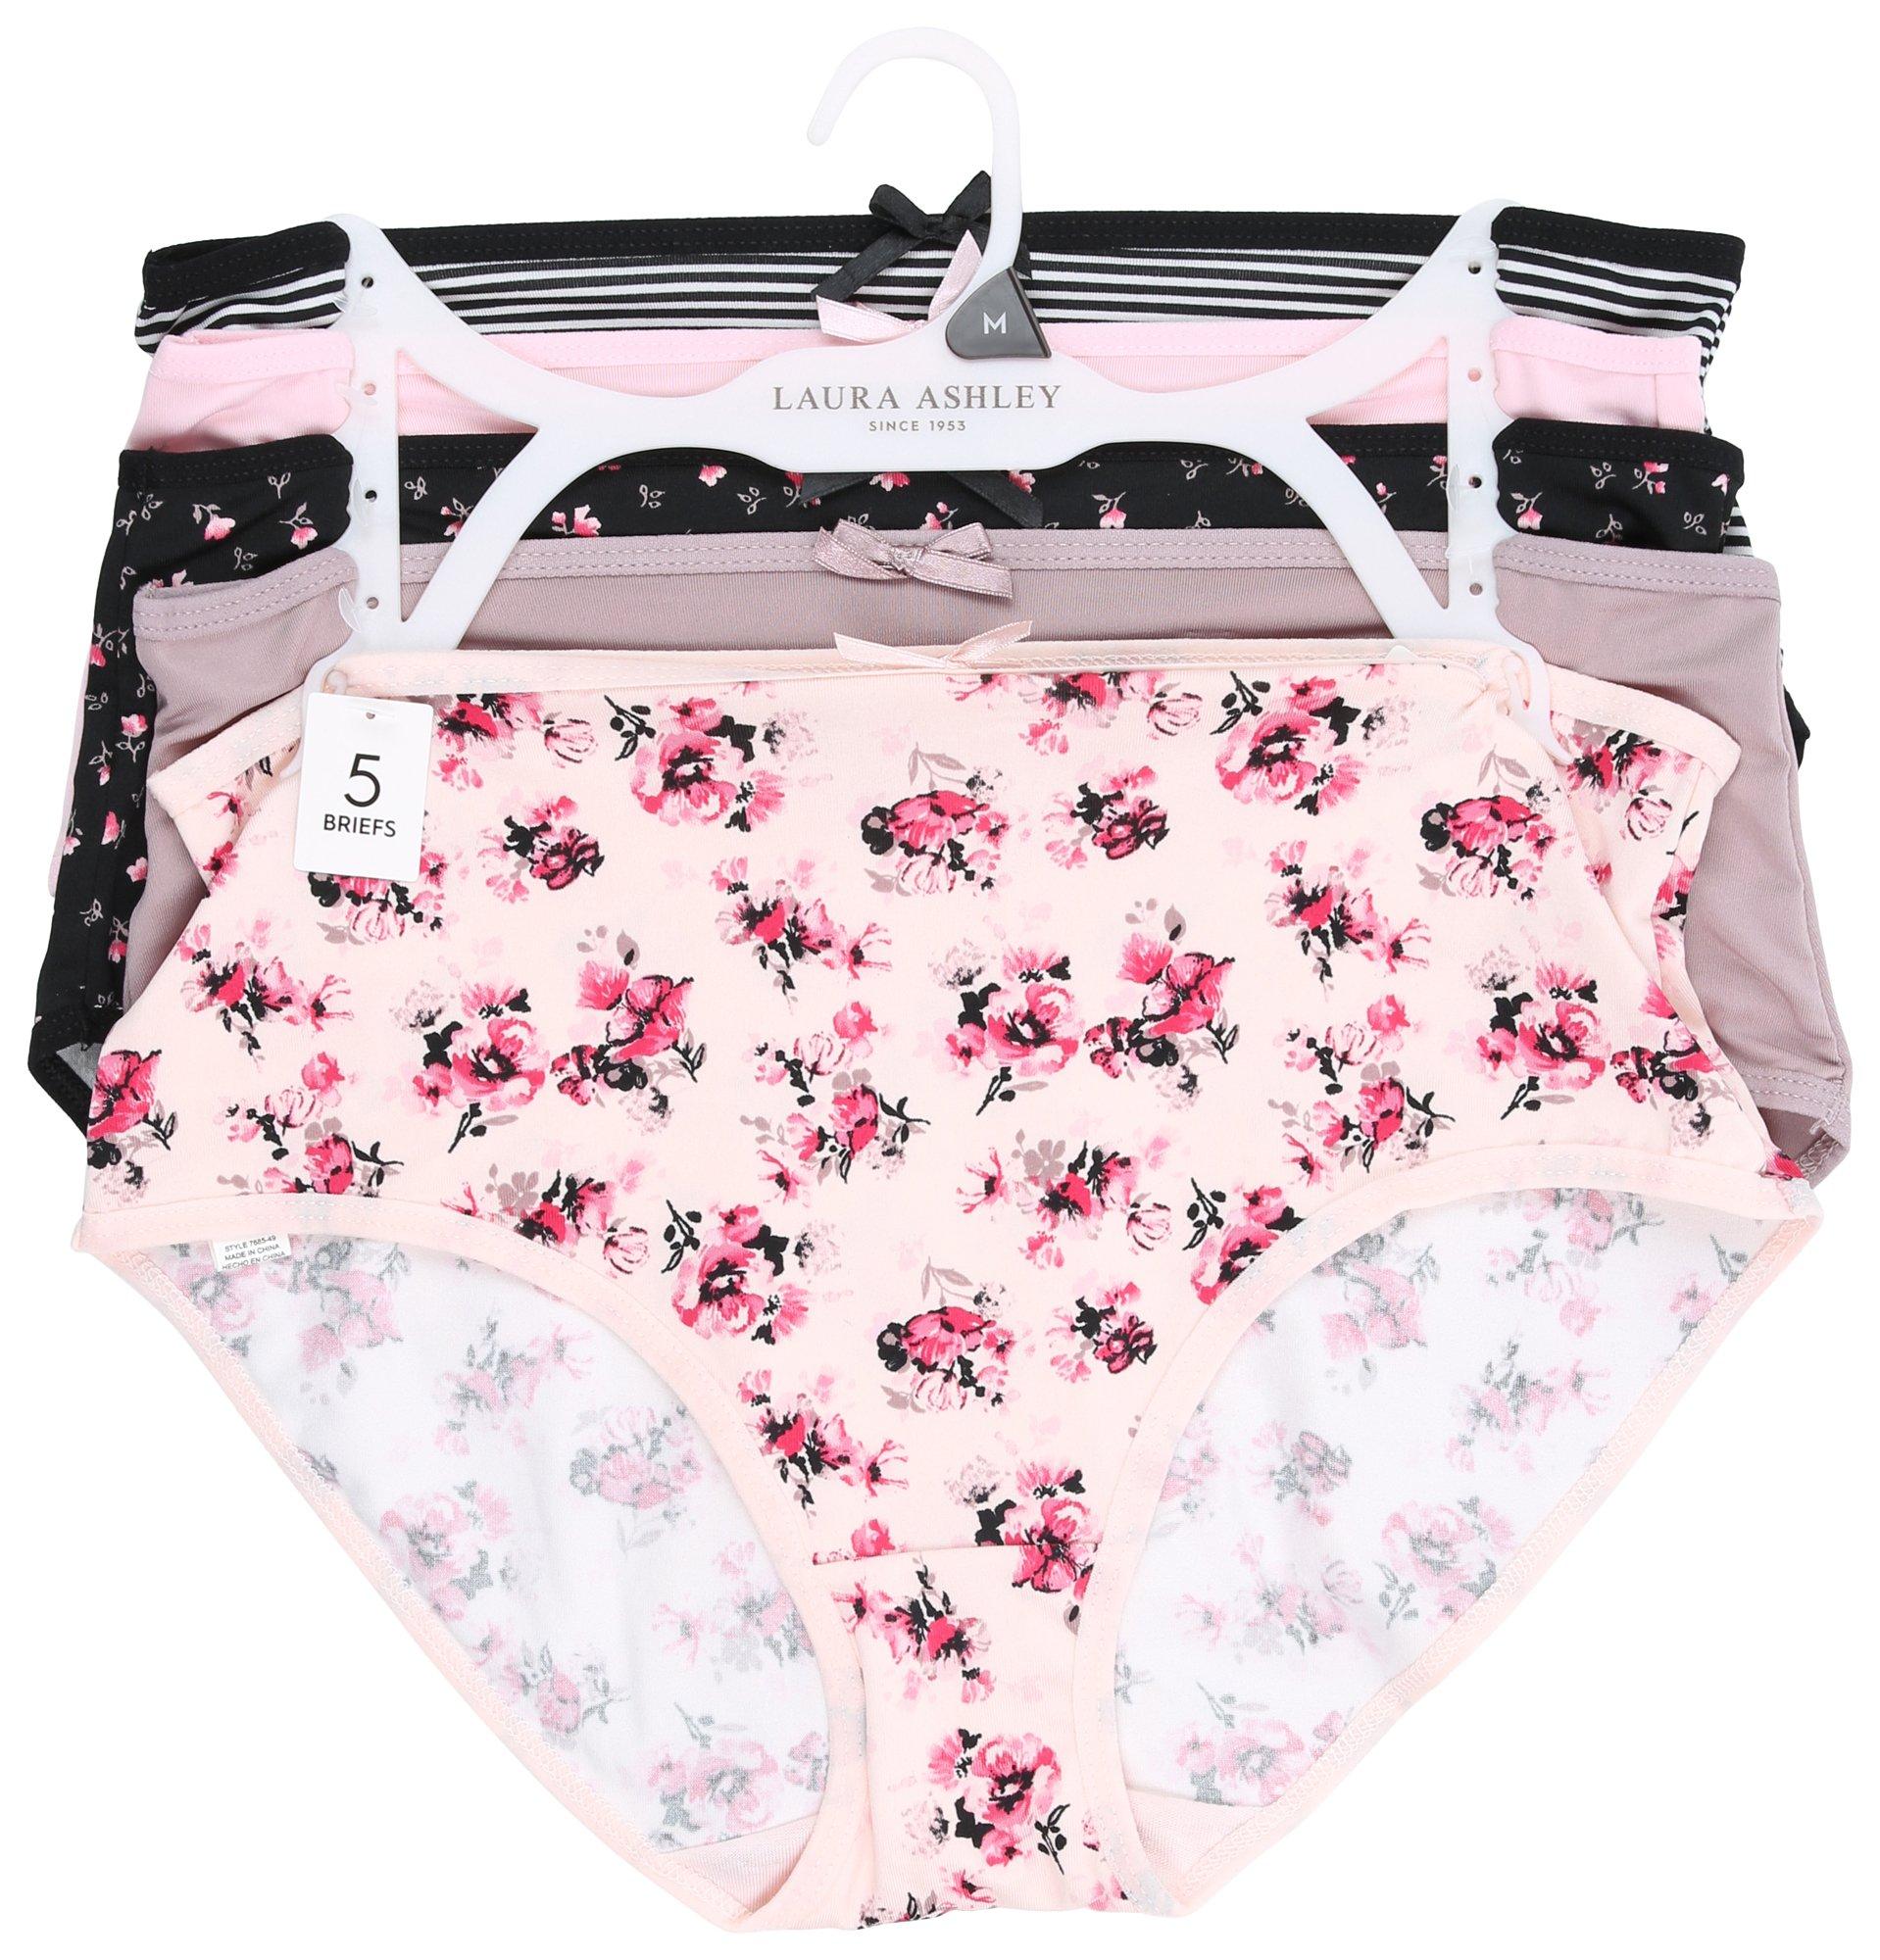 Laura Ashley, Intimates & Sleepwear, Laura Ashley Underwear Panties Set  Of 4 Briefs For Women Size 3x